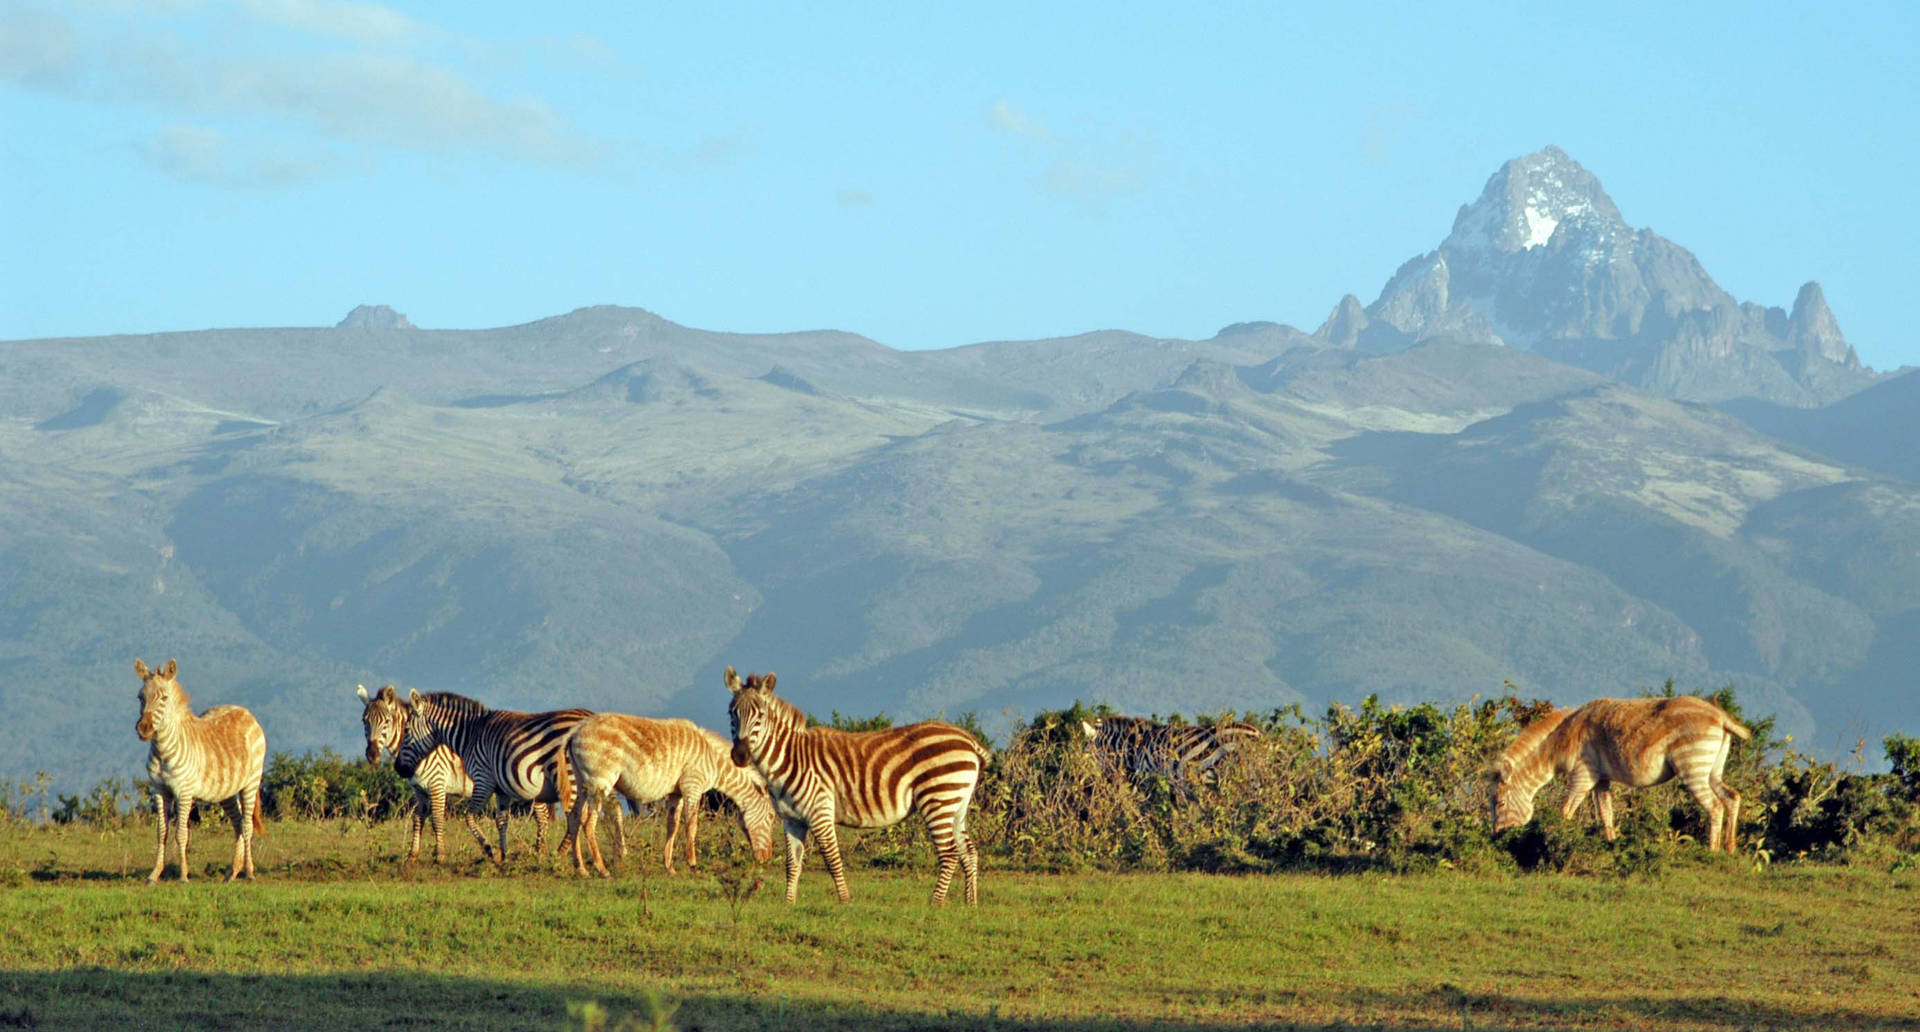 Mountain View In Kenya Africa Wallpaper